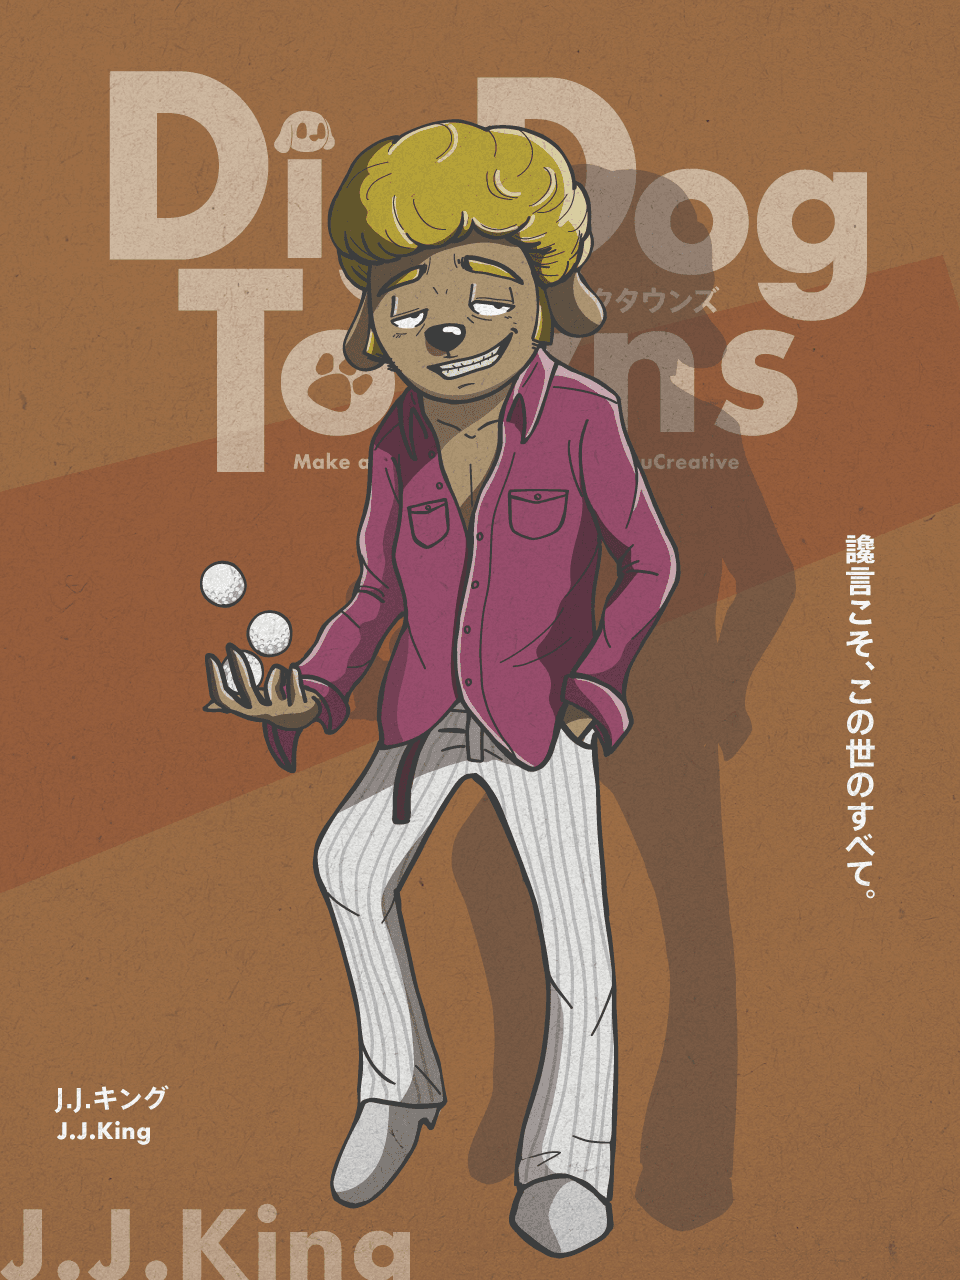 DigDogTowns character ／J.J.King